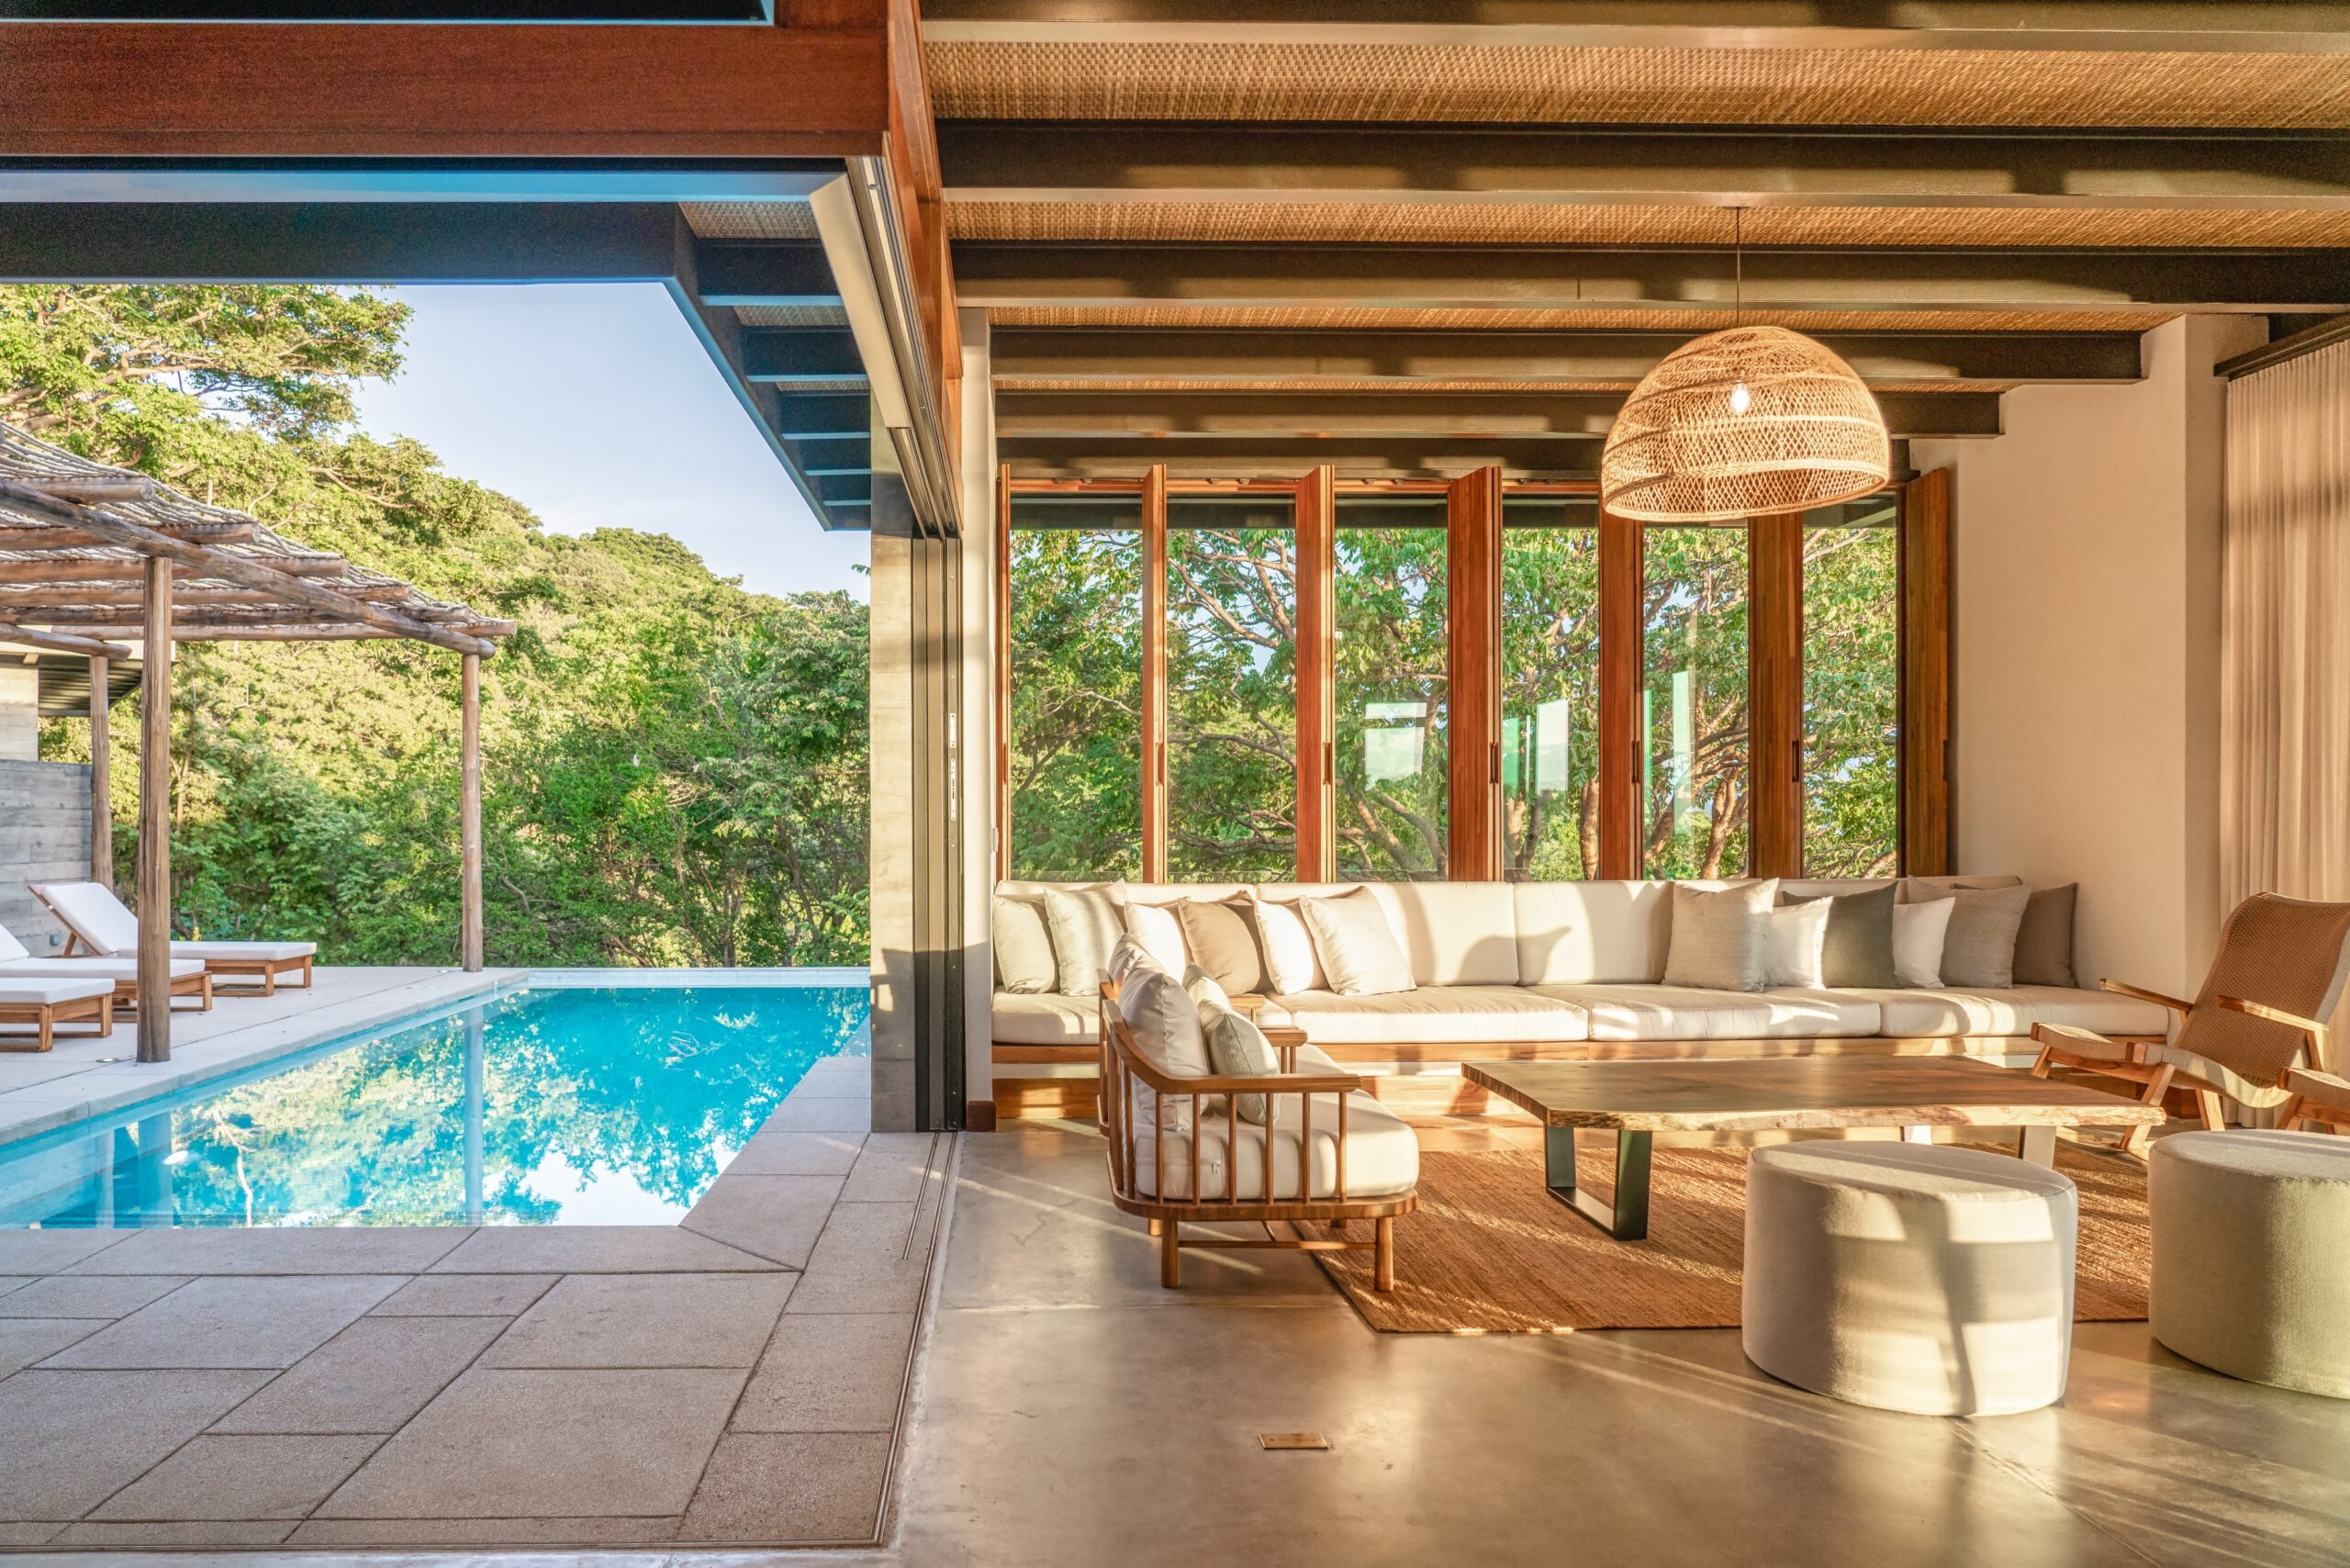 Open air living space and private pool at Inspirato home in Costa Elena, Costa Rica.